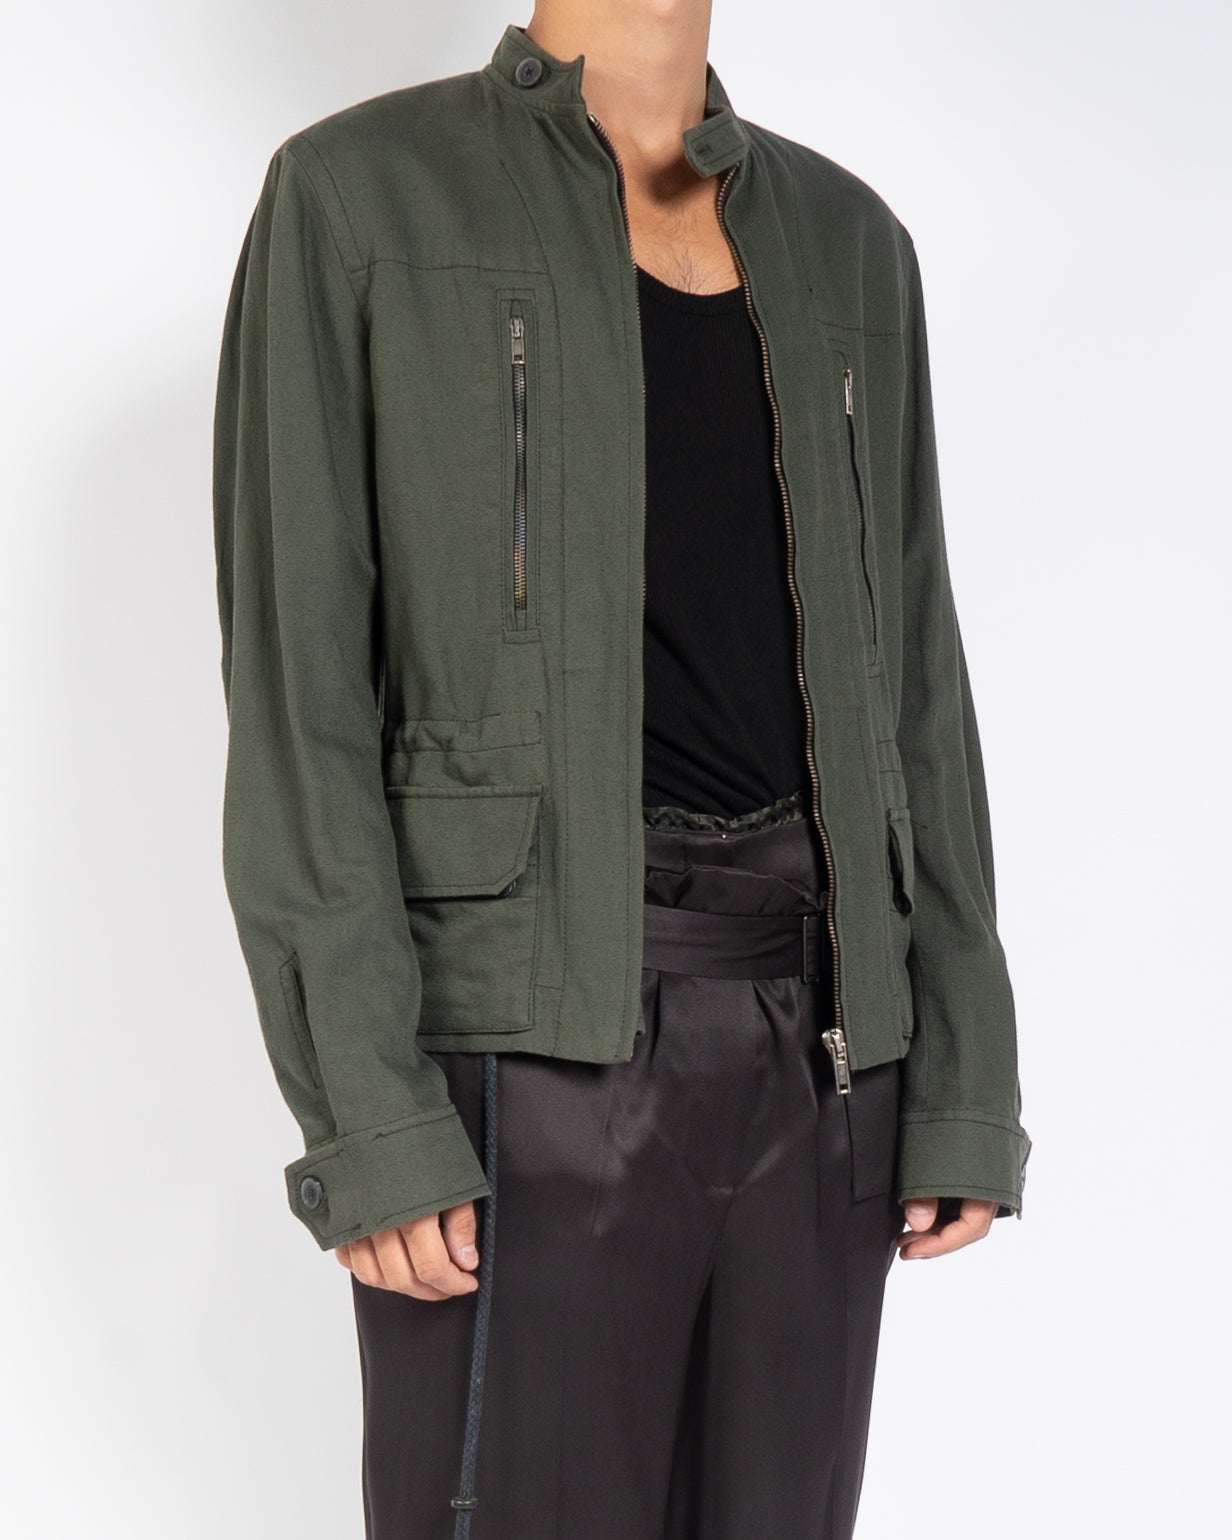 SS16 Green Cotton Jacket